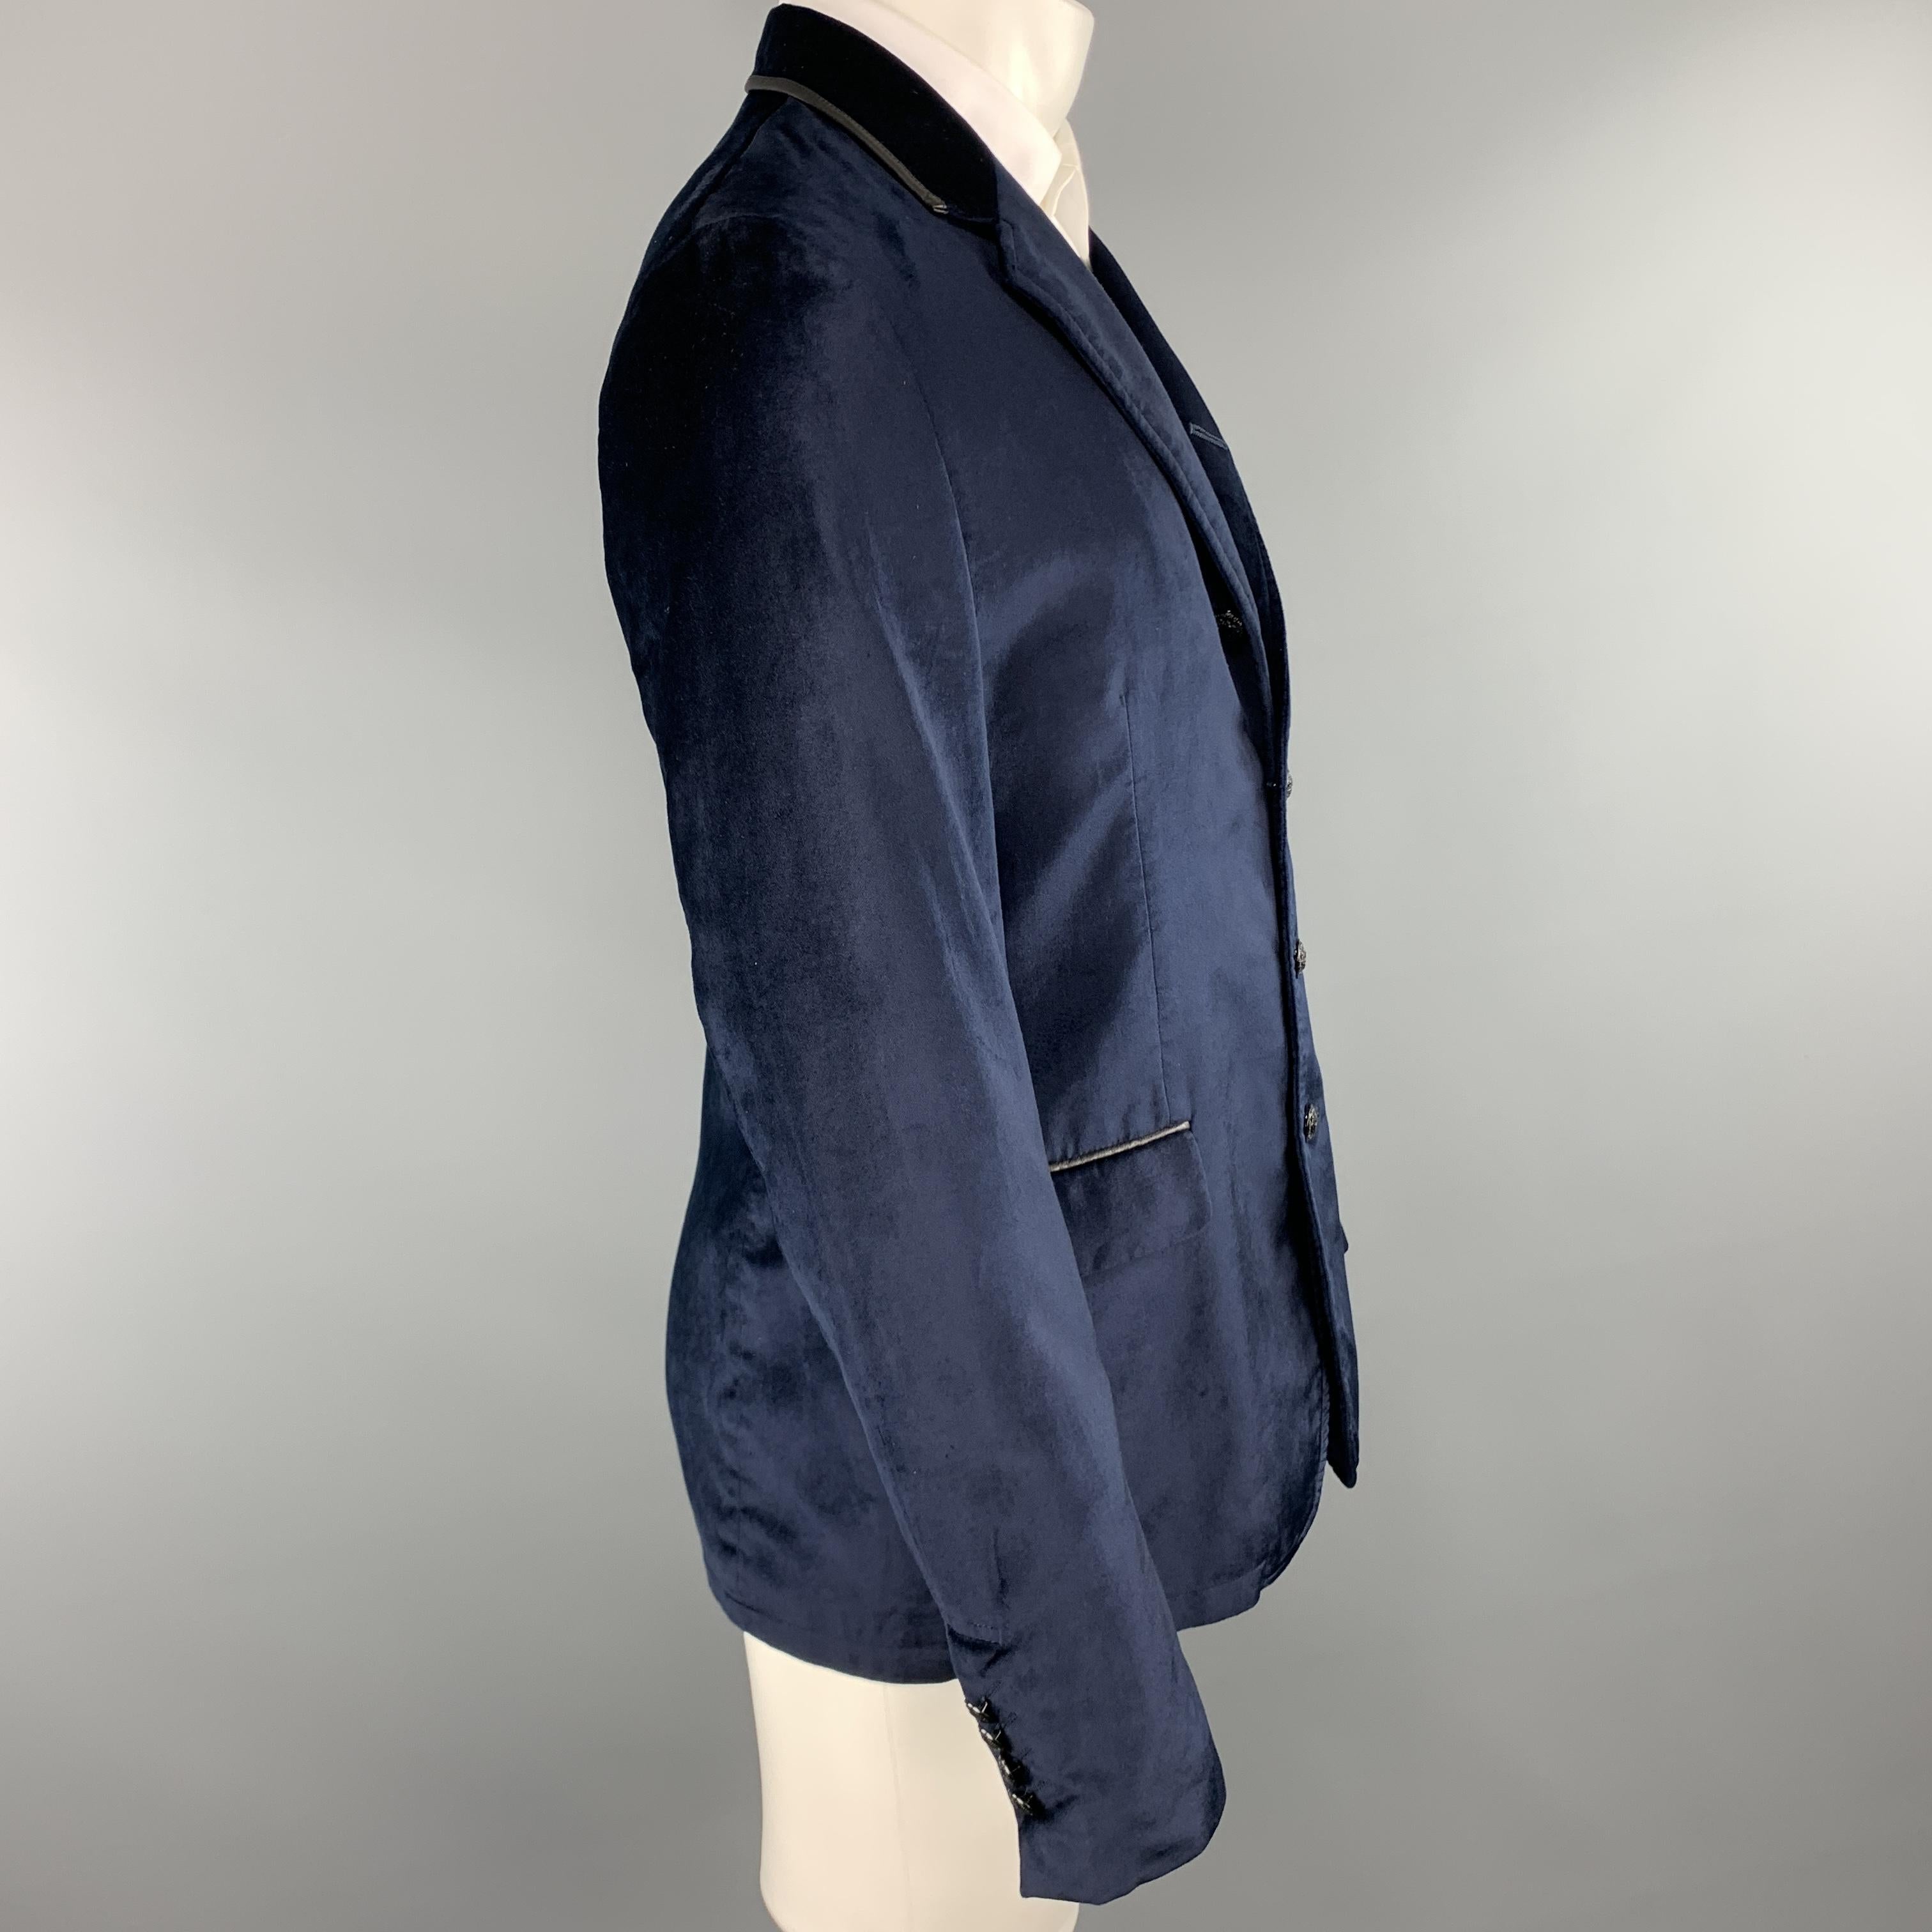 Men's JOHN VARVATOS Size 40 Navy Velvet High Collar Leather Trim Military Sport Coat